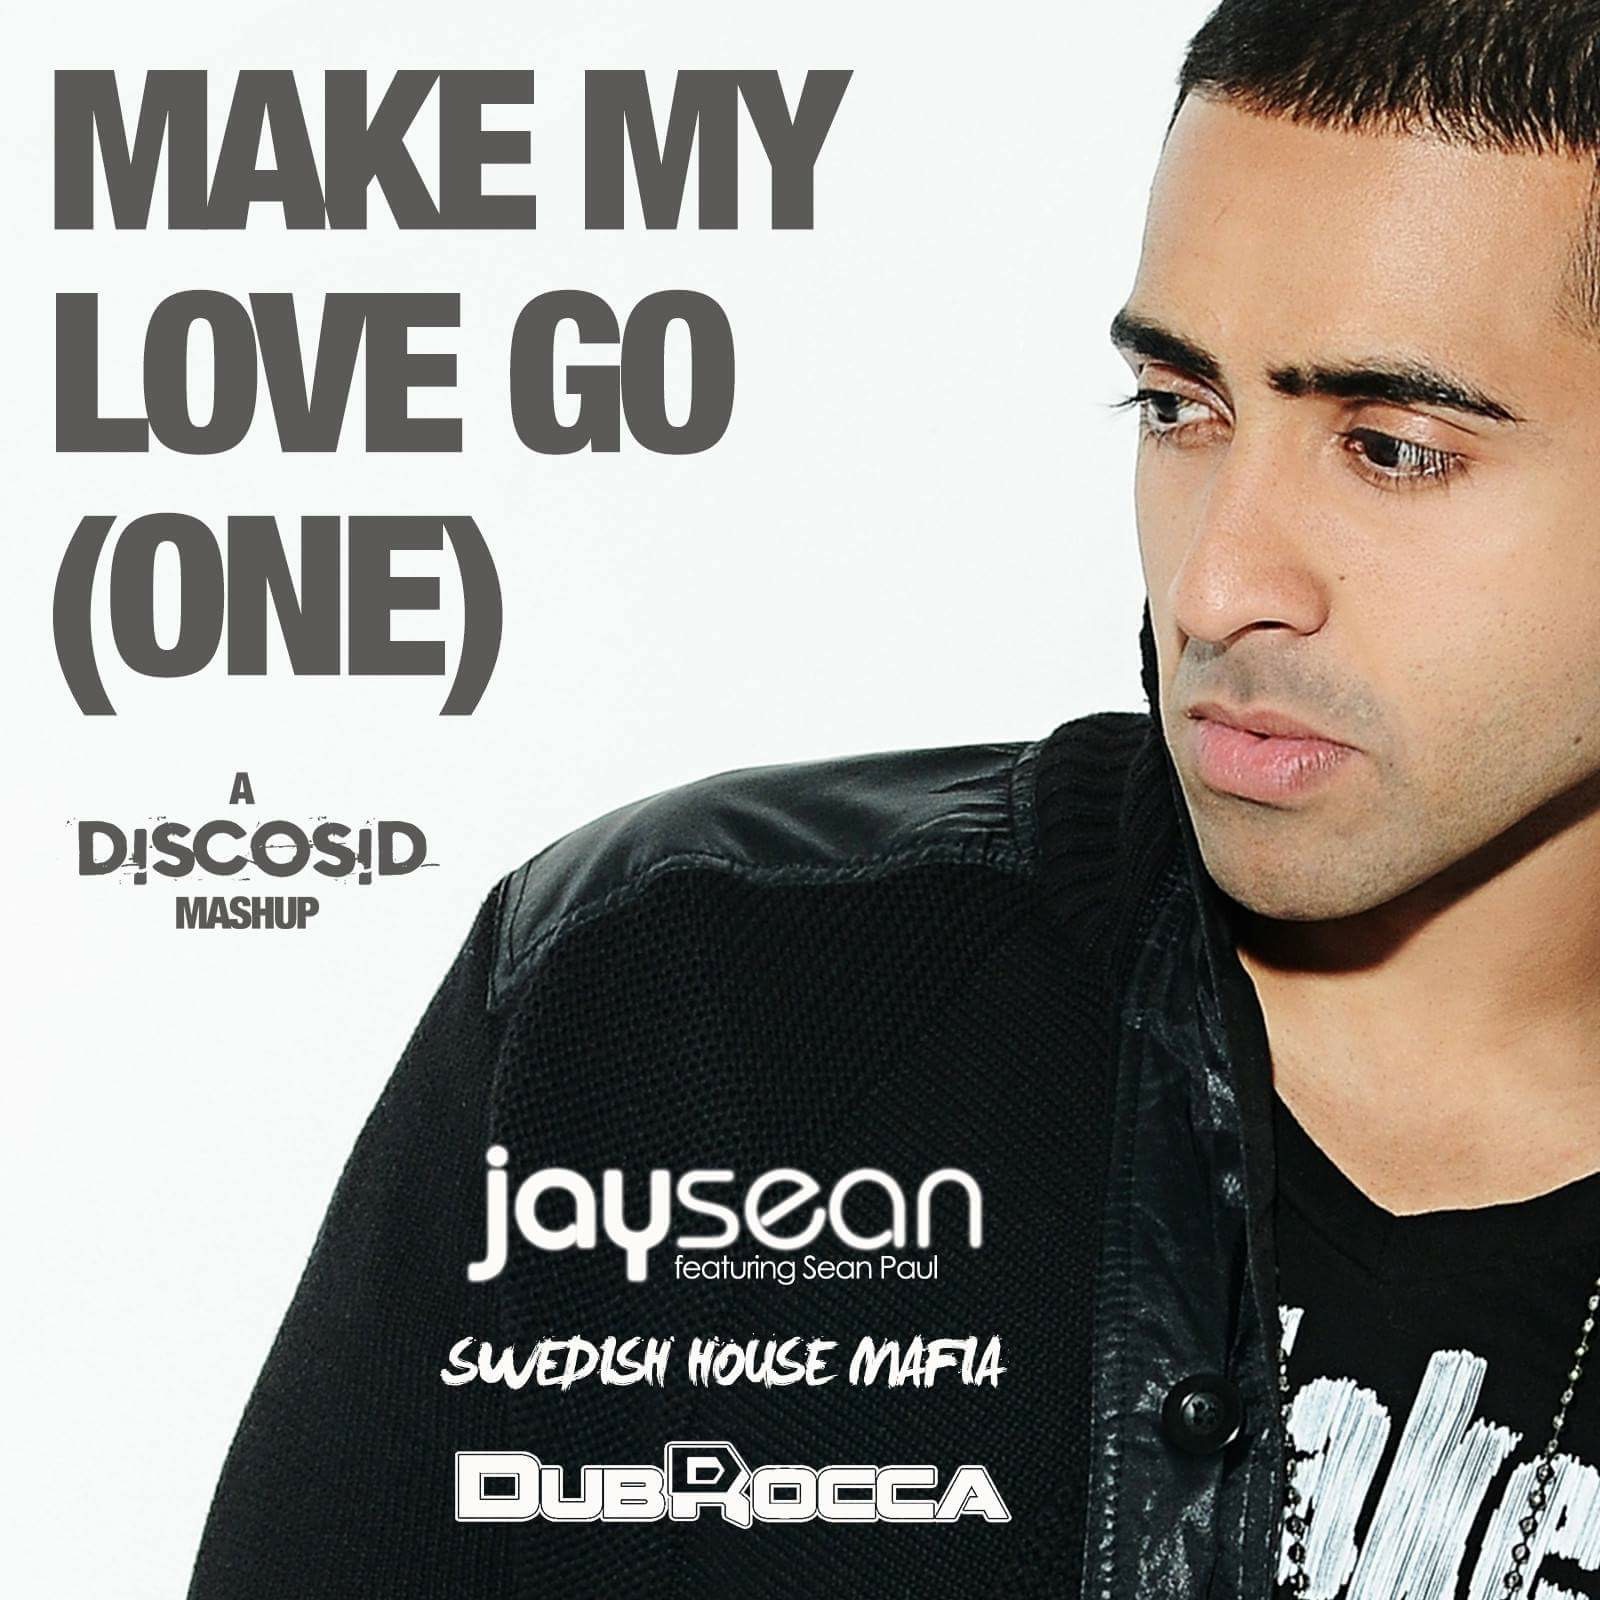 Jay Sean & Sean Paul Vs Swedish House Mafia & Dubrocca - Make My Love Go (One) (Discosid Mashup)